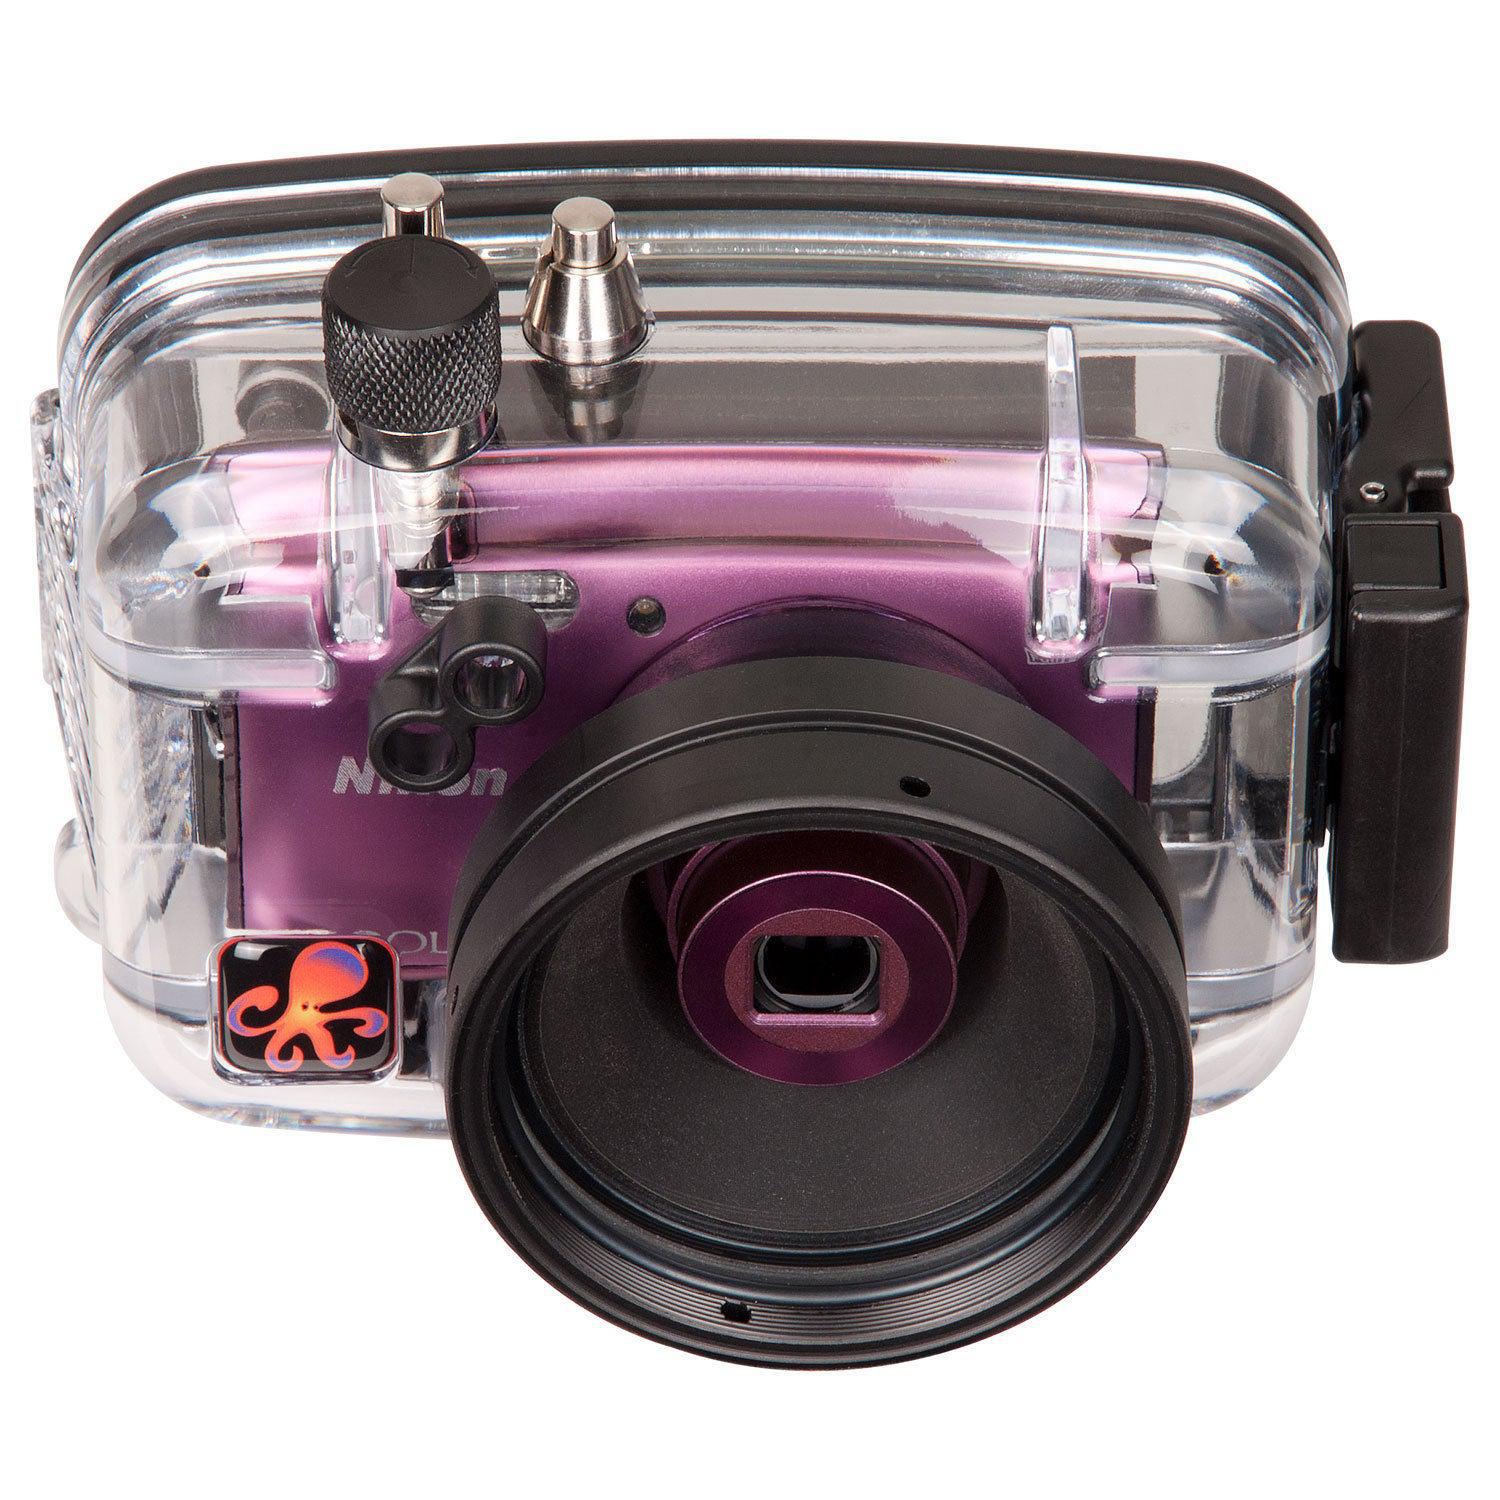 Ikelite 6282.53 Underwater Camera Housing for Nikon S5300 Digital Camera-